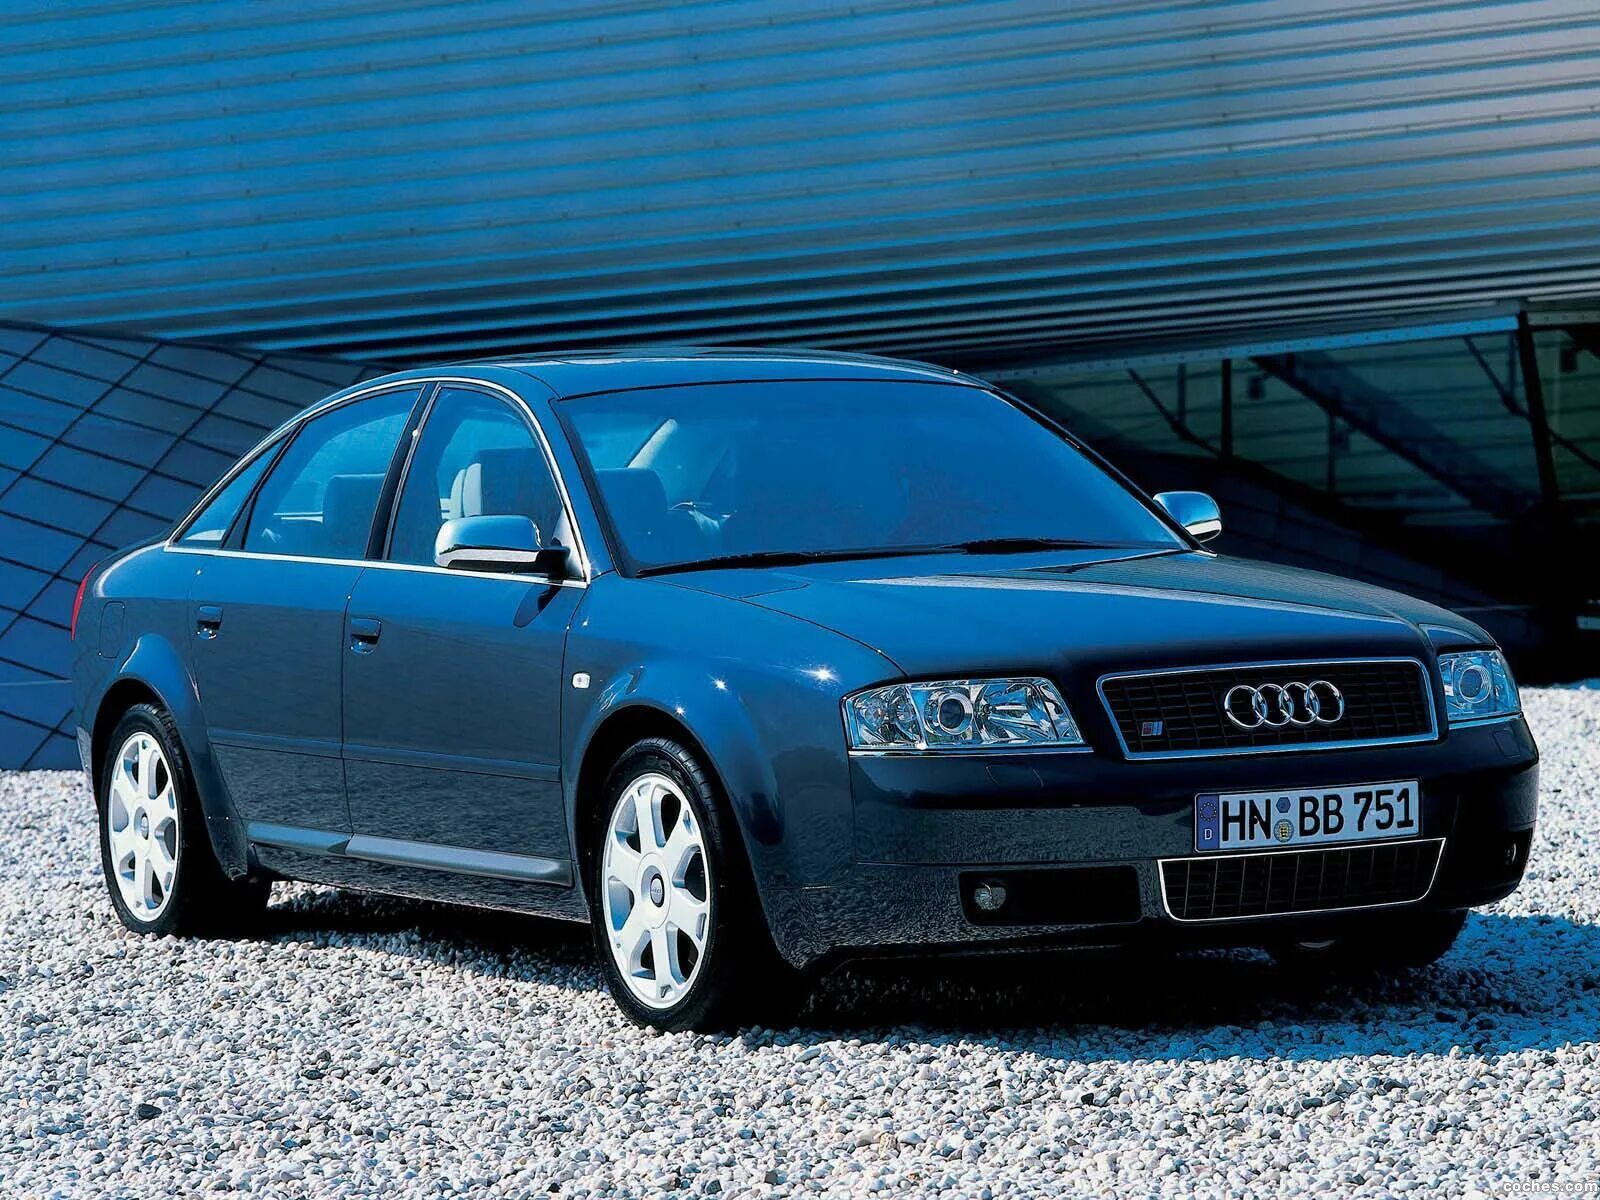 Ауди а6 с5 2000 год. Audi a6 c5 1999. Audi a6 c5 2004. Audi s6 c5. Ауди а6 c5 2000.